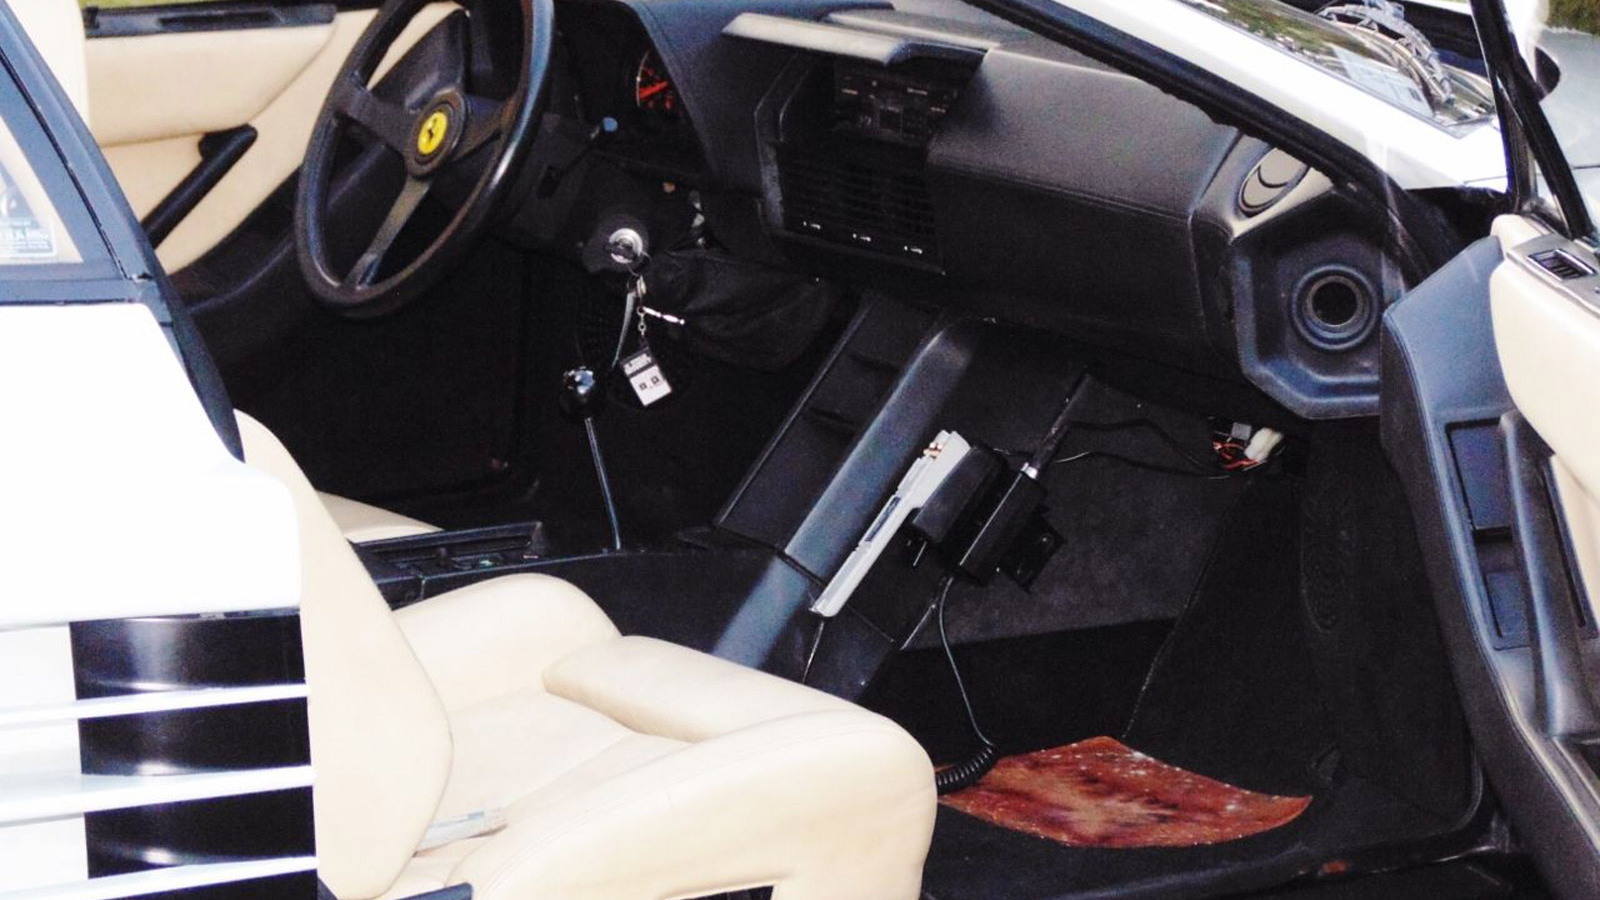 1986 Ferrari Testarossa from ‘Miami Vice’ - Image via eBay Motors